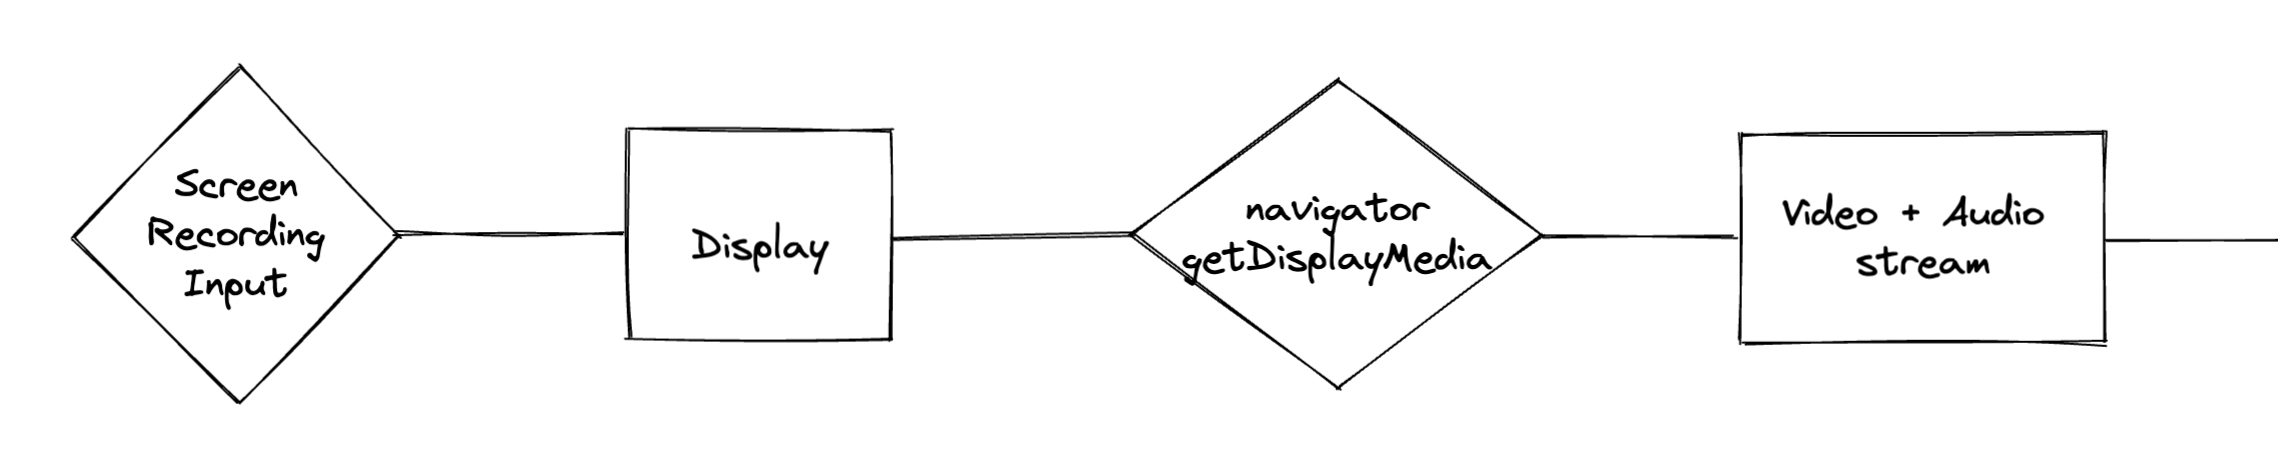 Flow diagram of screen recording